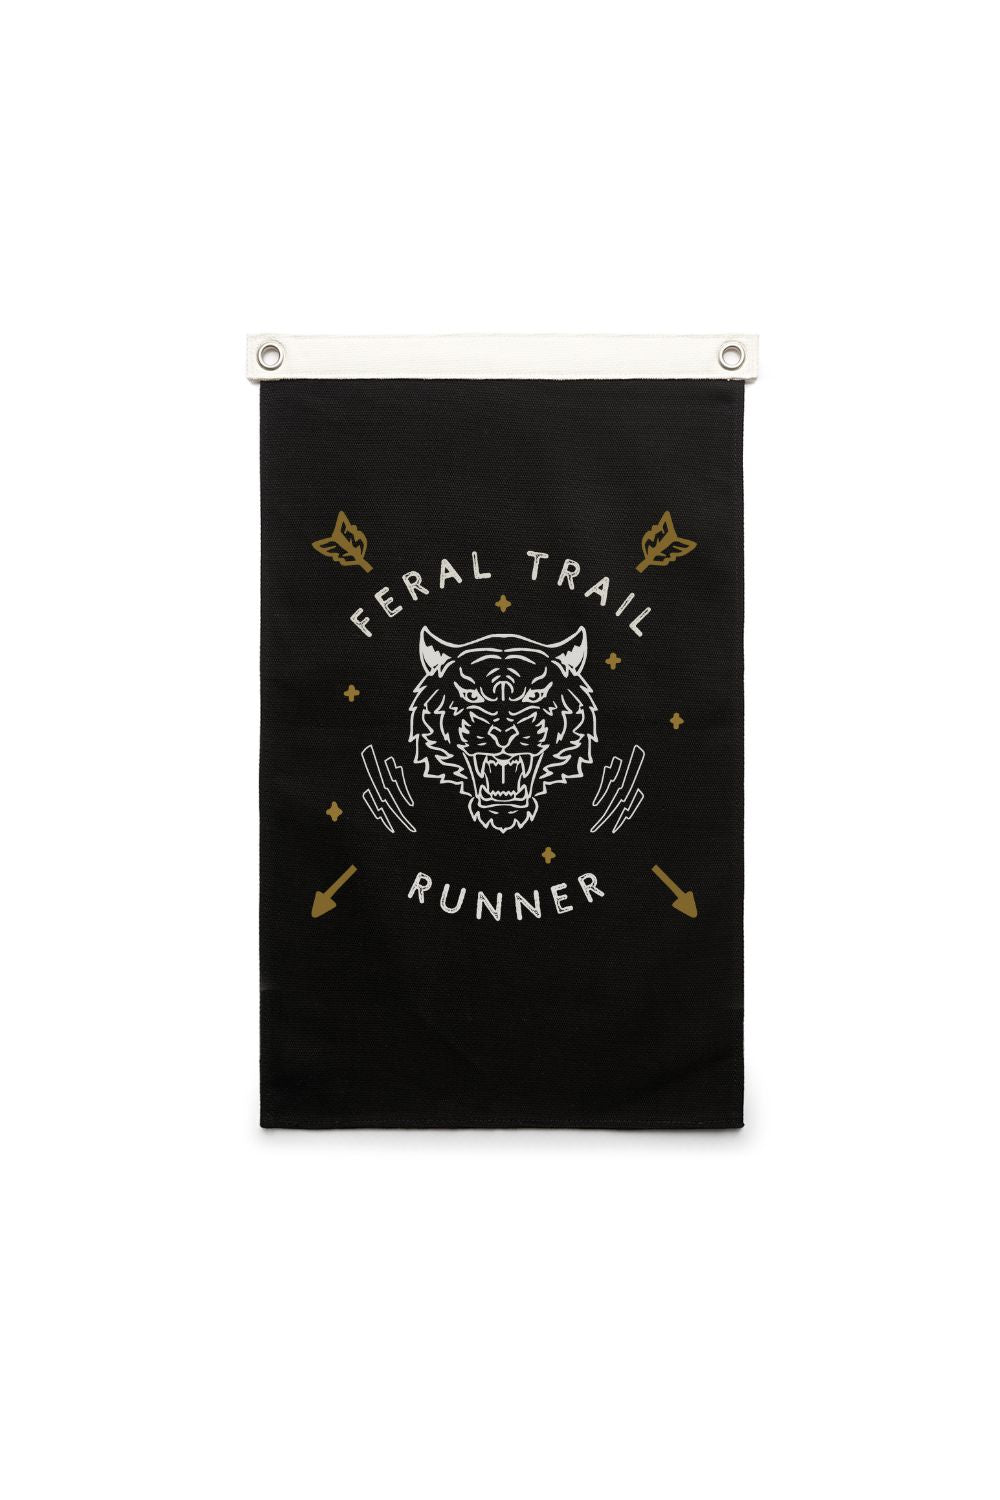 Feral Trail Runner Canvas Banner